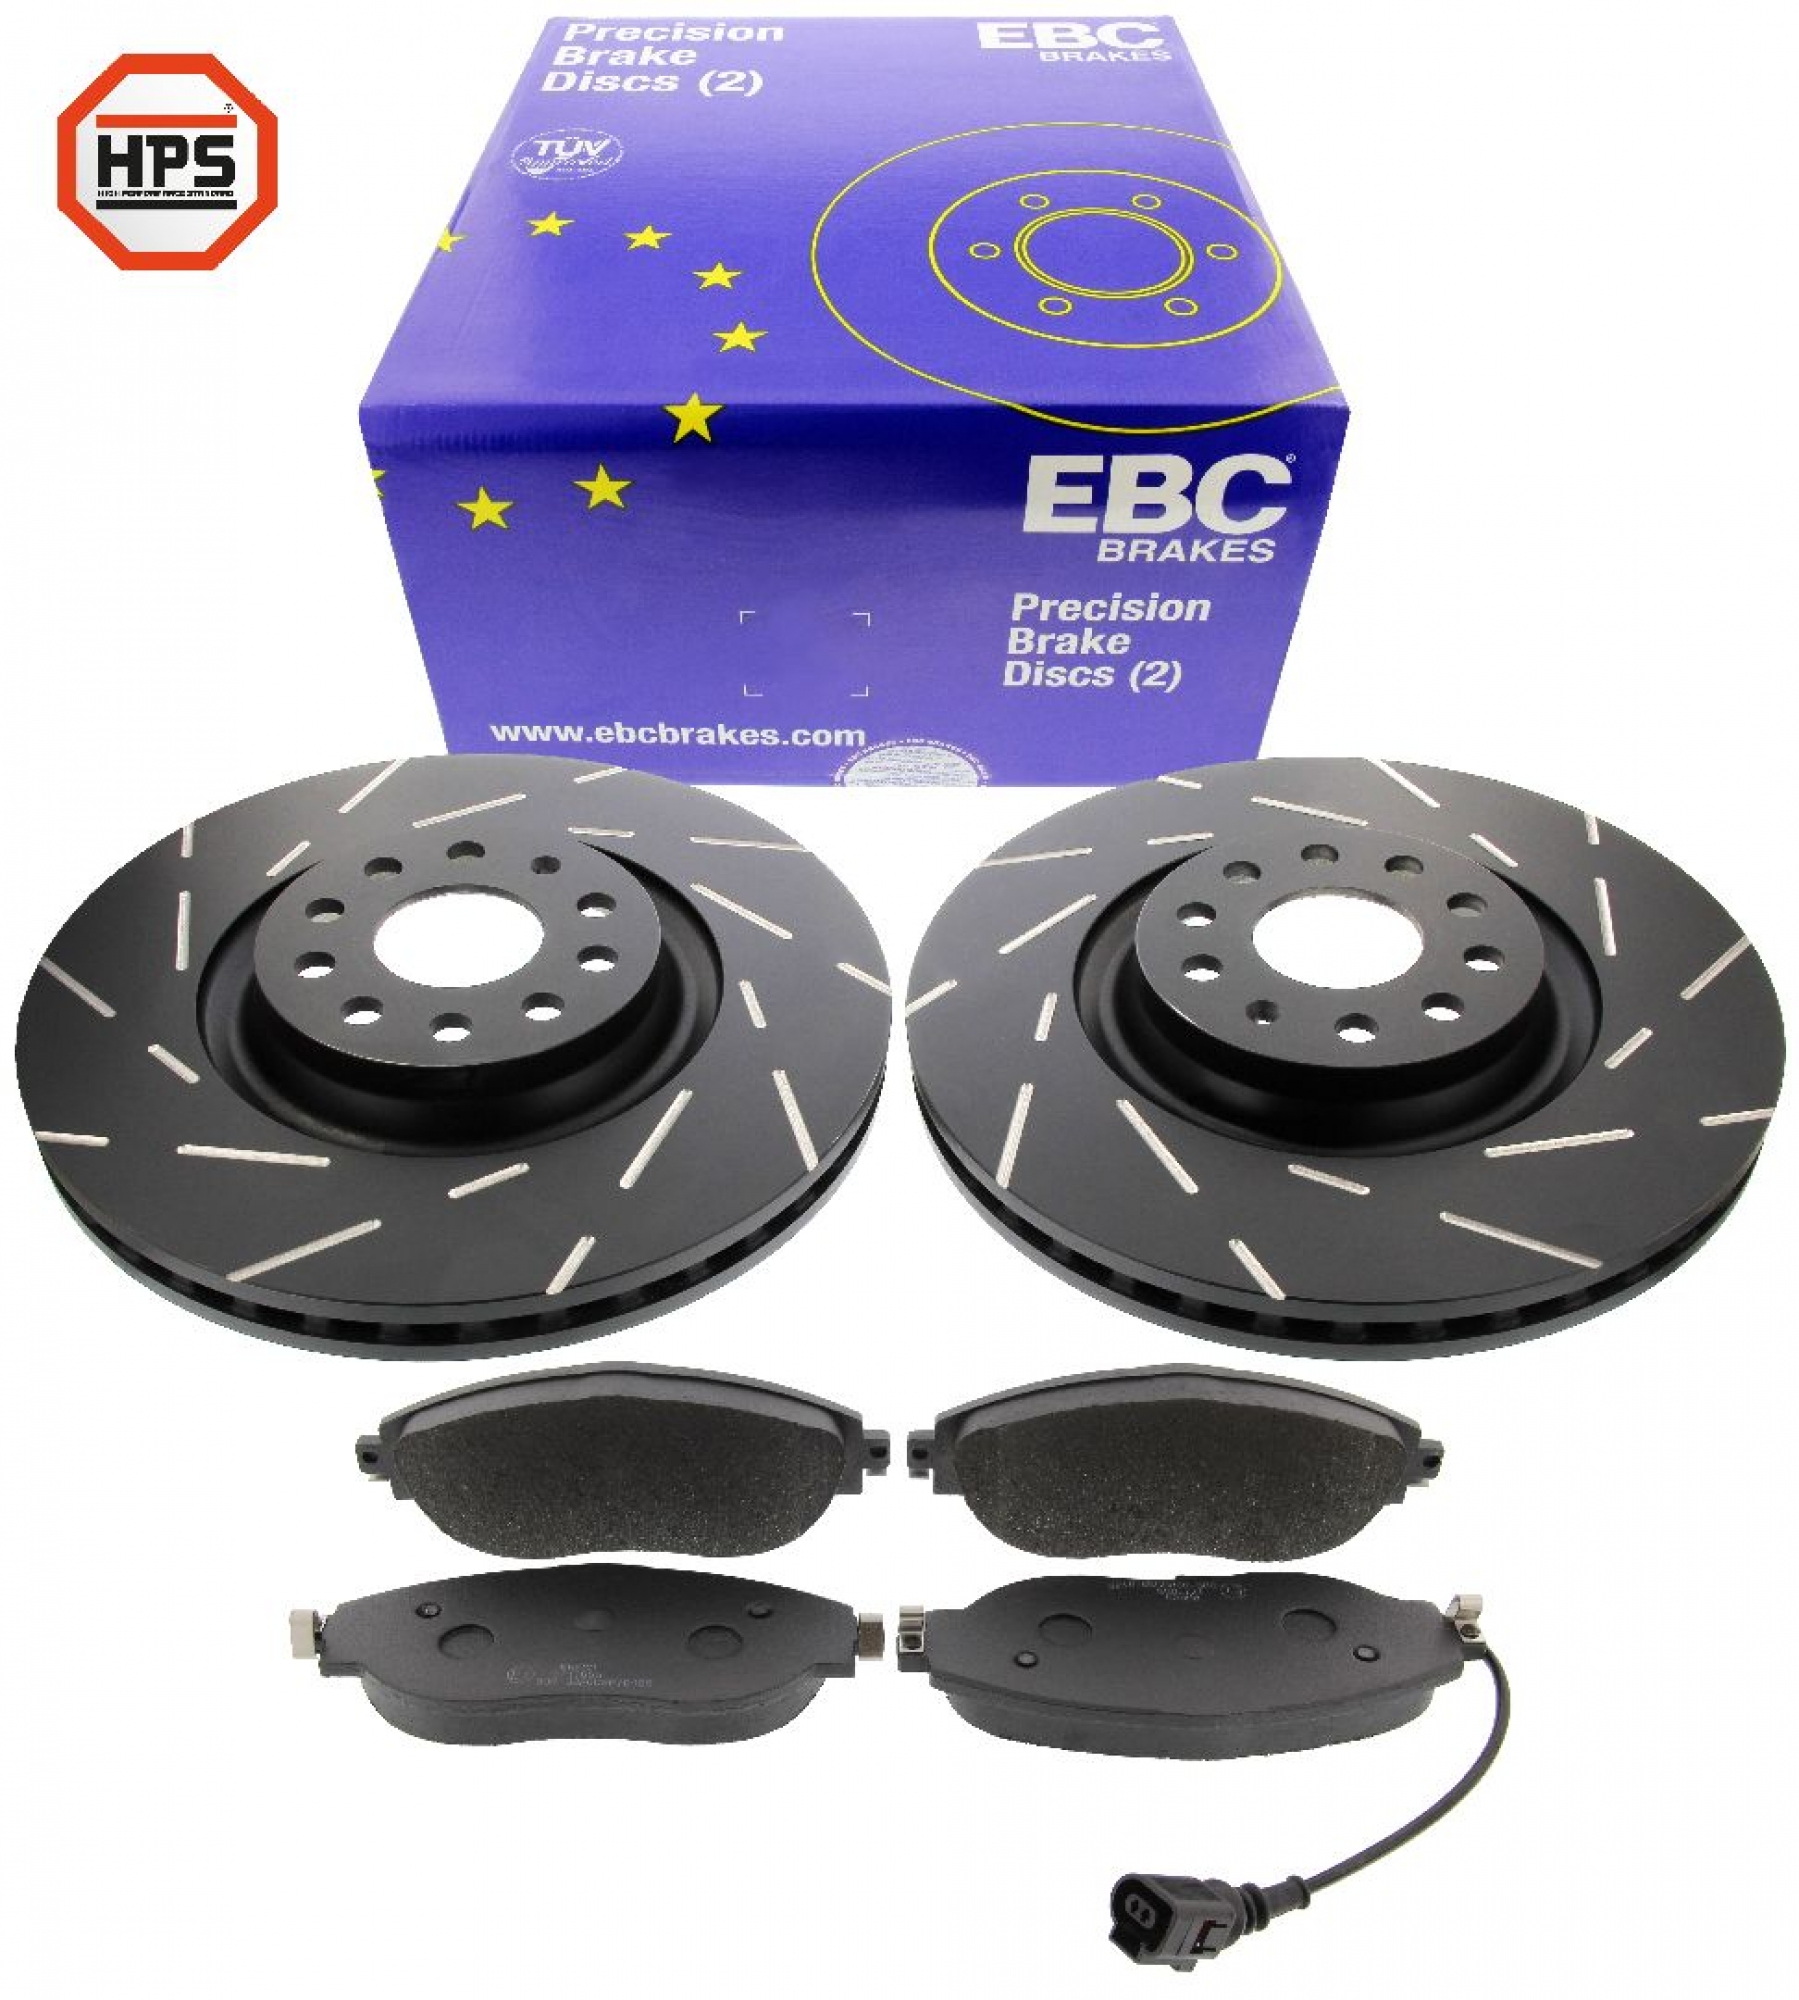 EBC-Bremsensatz, Black Dash Disc + HPS-Carbon-Bremsbelägen von MAPCO, Achssatz, VA, Audi, Seat, Skoda, VW